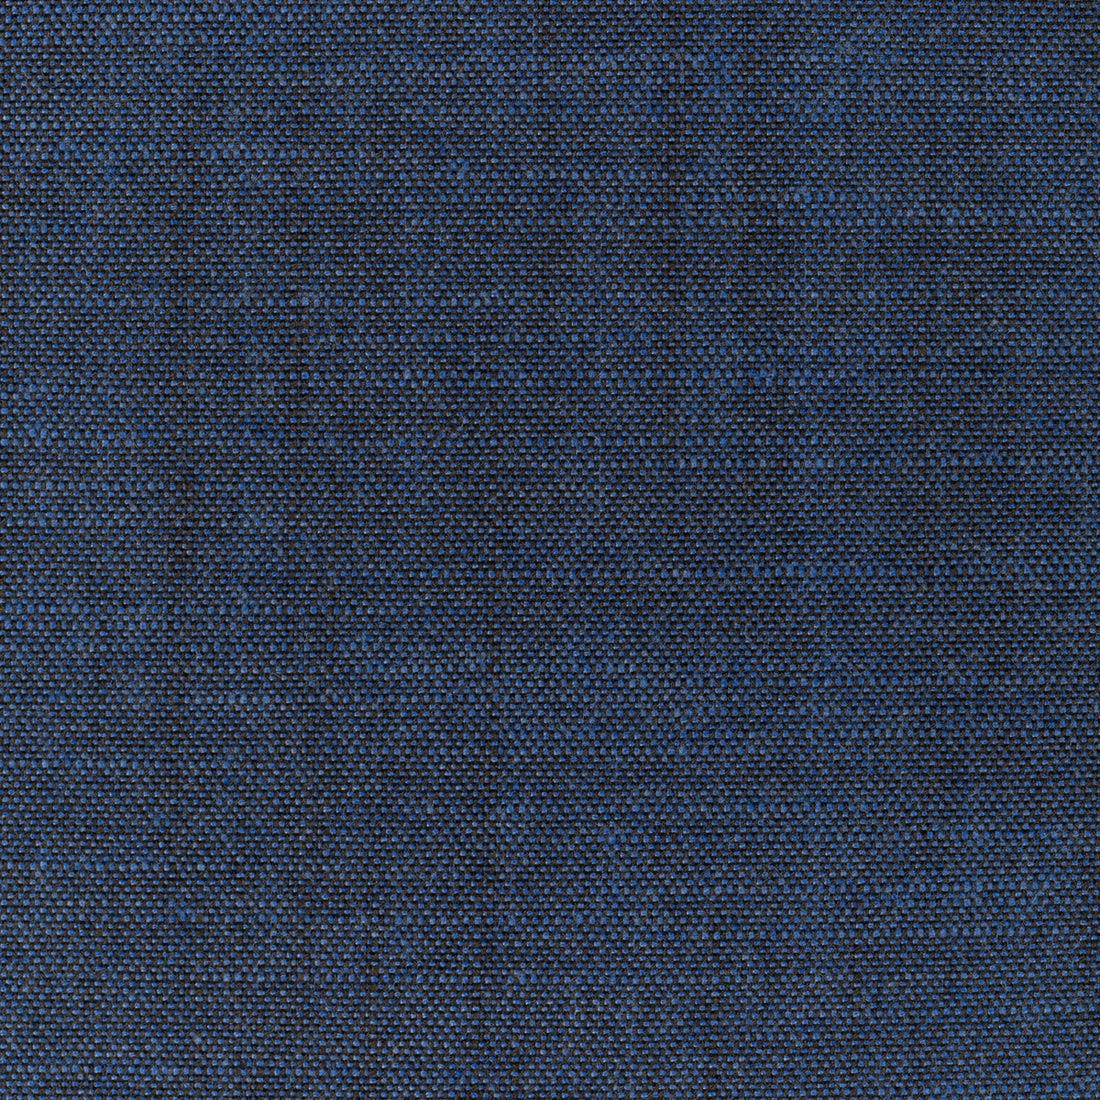 Kravet Smart fabric in 36112-50 color - pattern 36112.50.0 - by Kravet Smart in the Performance Kravetarmor collection